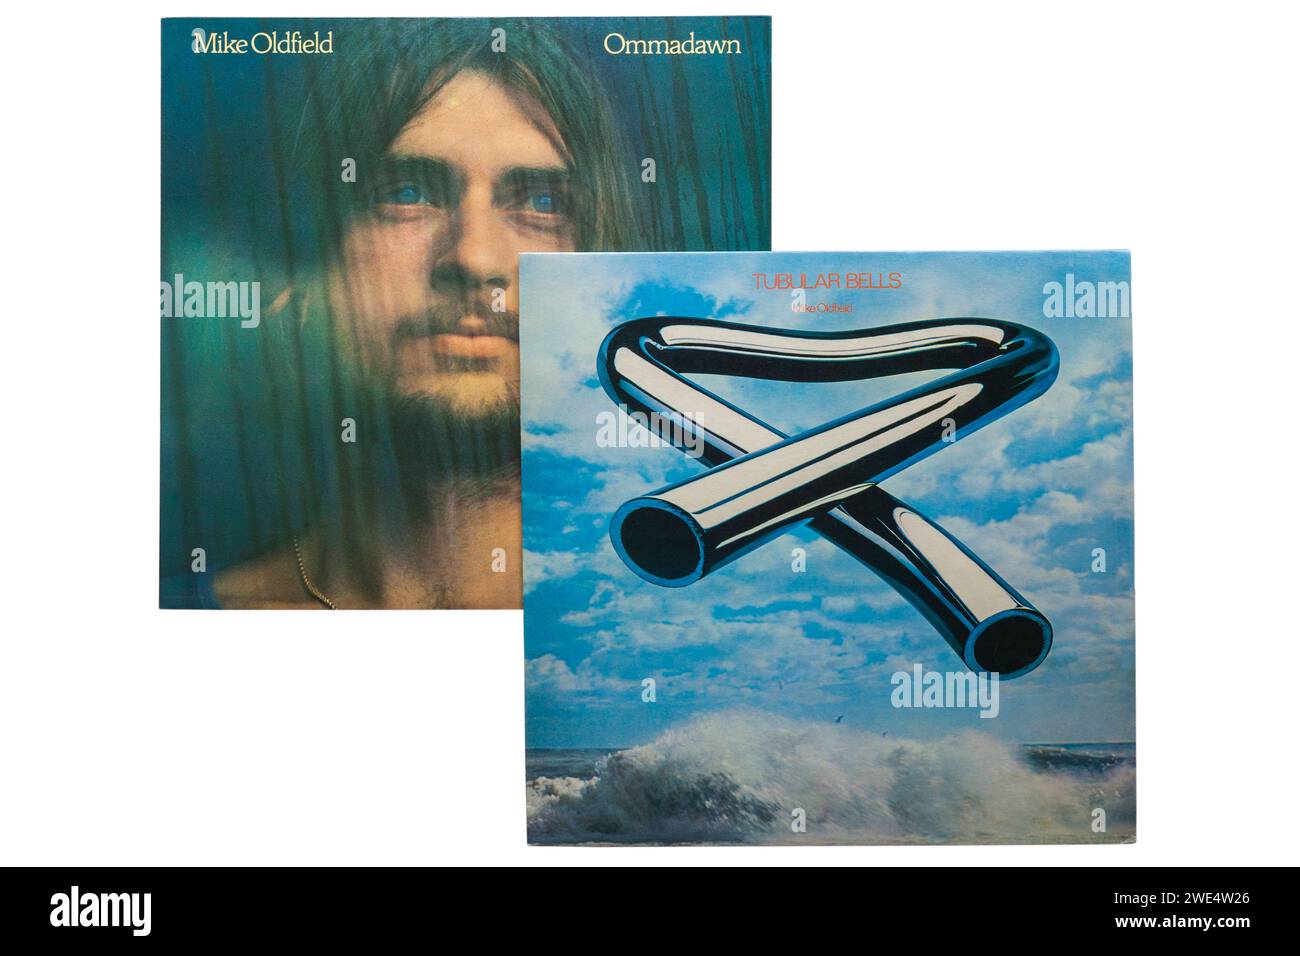 Mike Oldfield Tubular Bells 1973 vinyl record album LP cover & Ommadawn vinyl record album LP cover 1975 isolated on white background Stock Photo